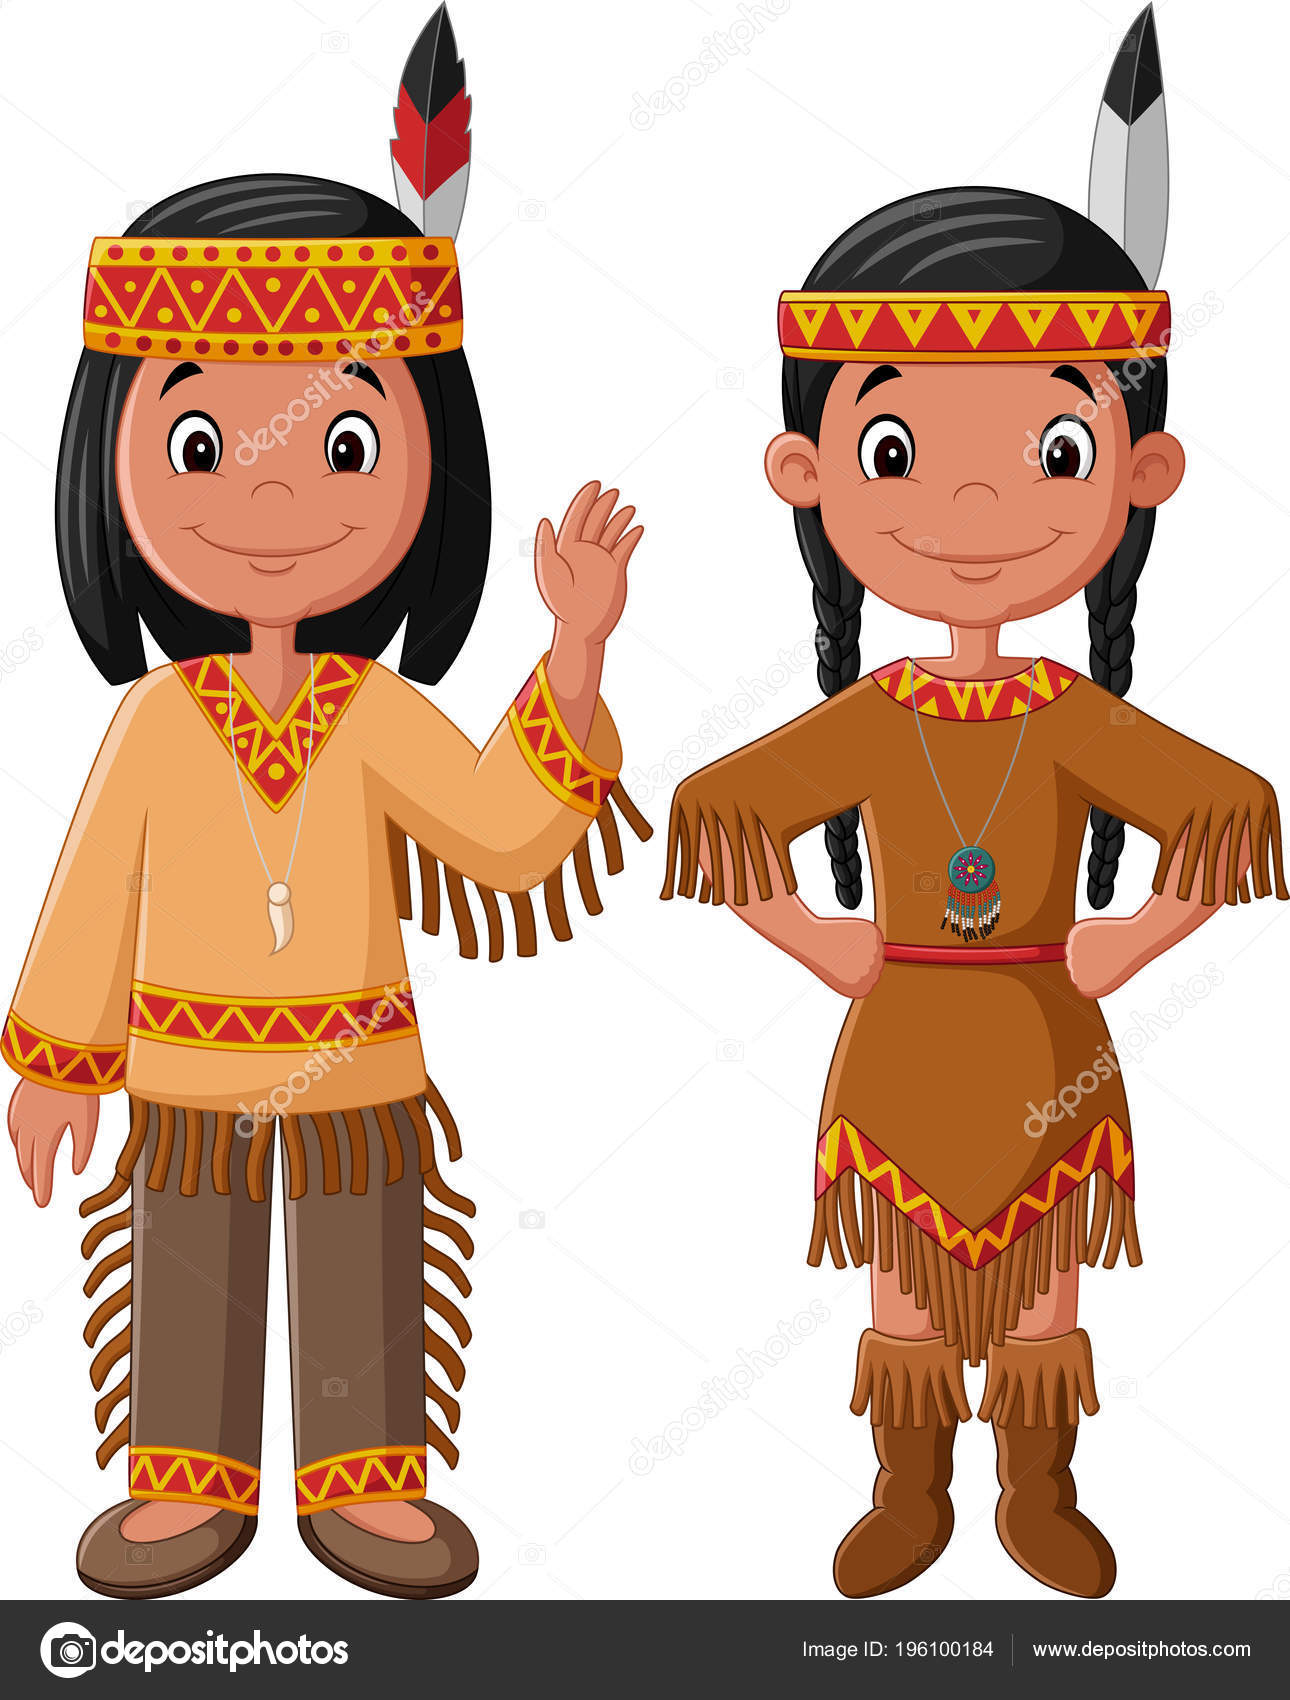 387 ilustraciones de stock de Pareja indigena | Depositphotos®